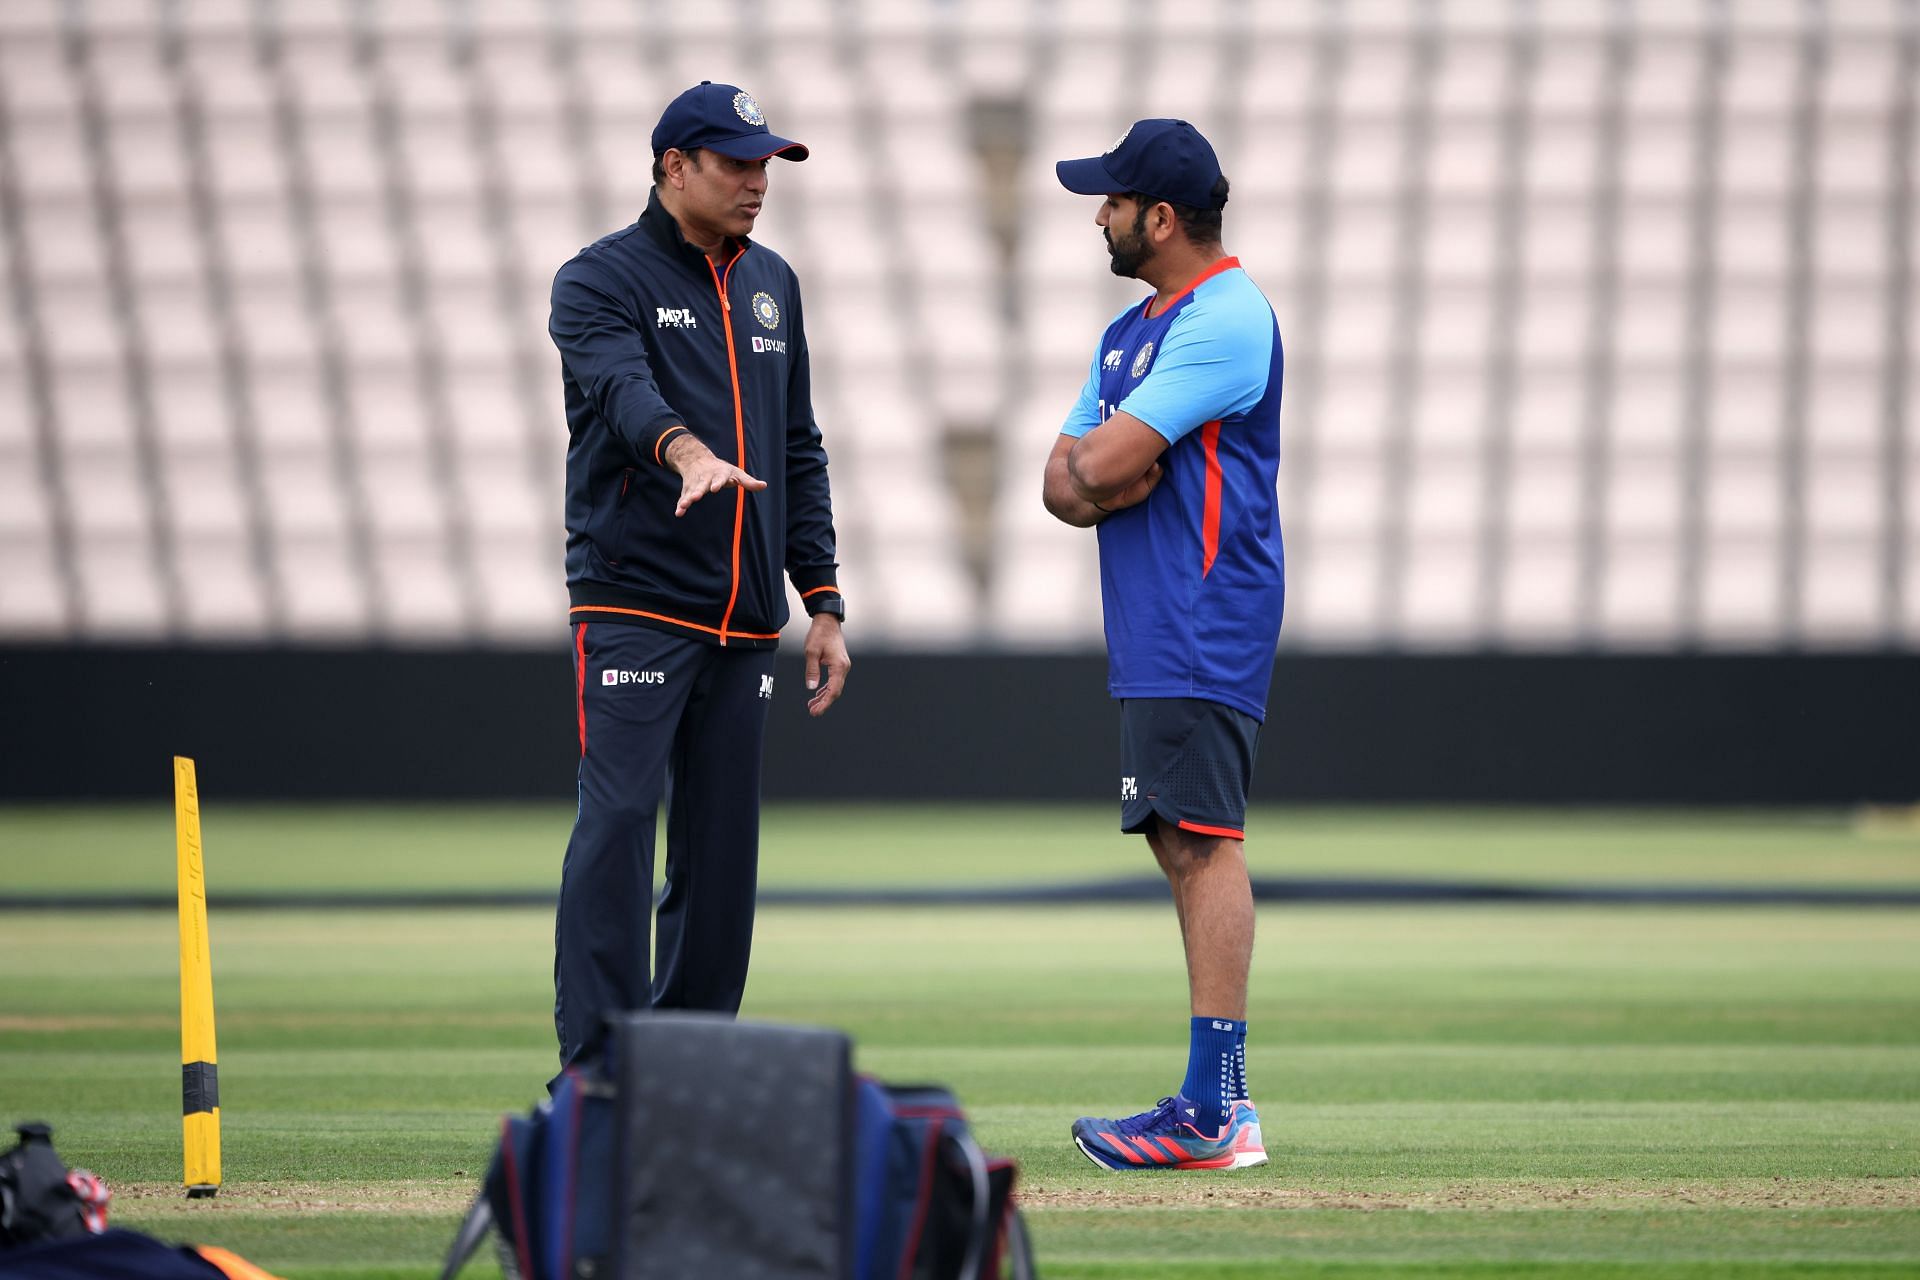 Asia Cup 2022 LIVE: Rahul Dravid to join India squad before Super 4 matches, VVS Laxman named interim Head Coach, India vs Pakistan LIVE, IND vs PAK LIVE